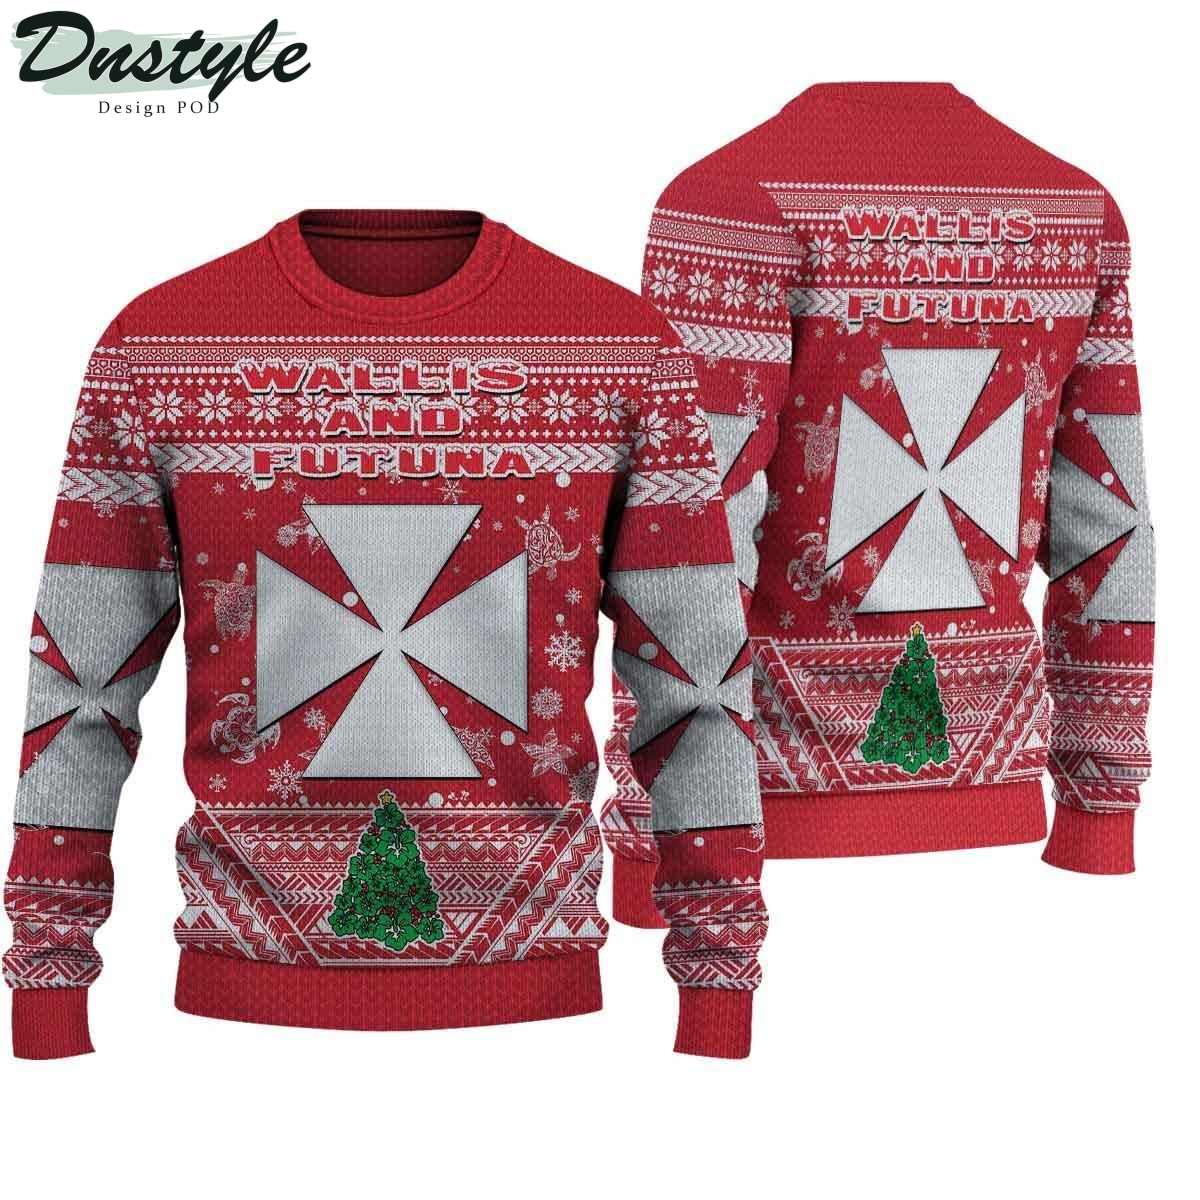 Tuvalu ugly christmas sweater